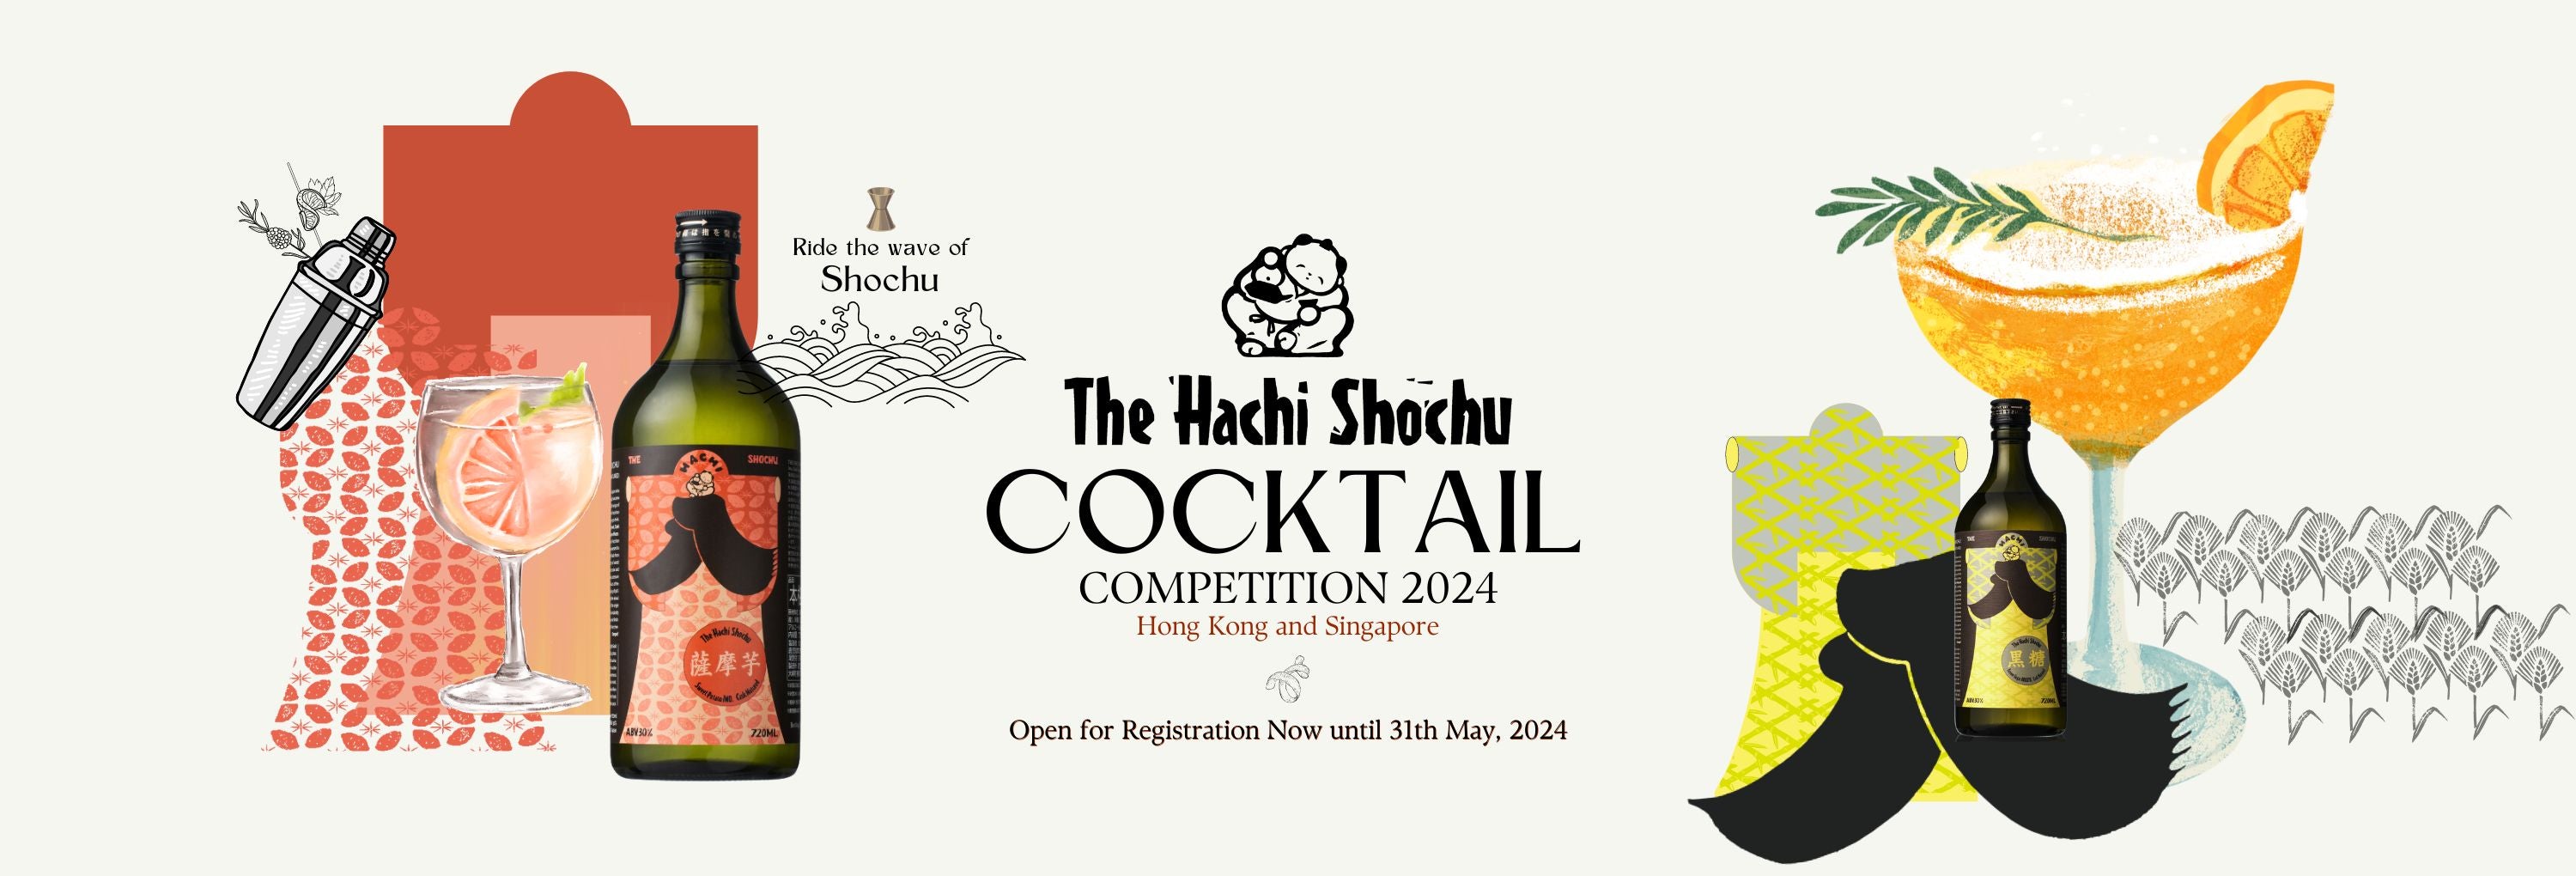 The hachi shochu cocktail competition 2024 mizunaratheshop e30848e3 1b71 4977 8164 feec0492fe8d